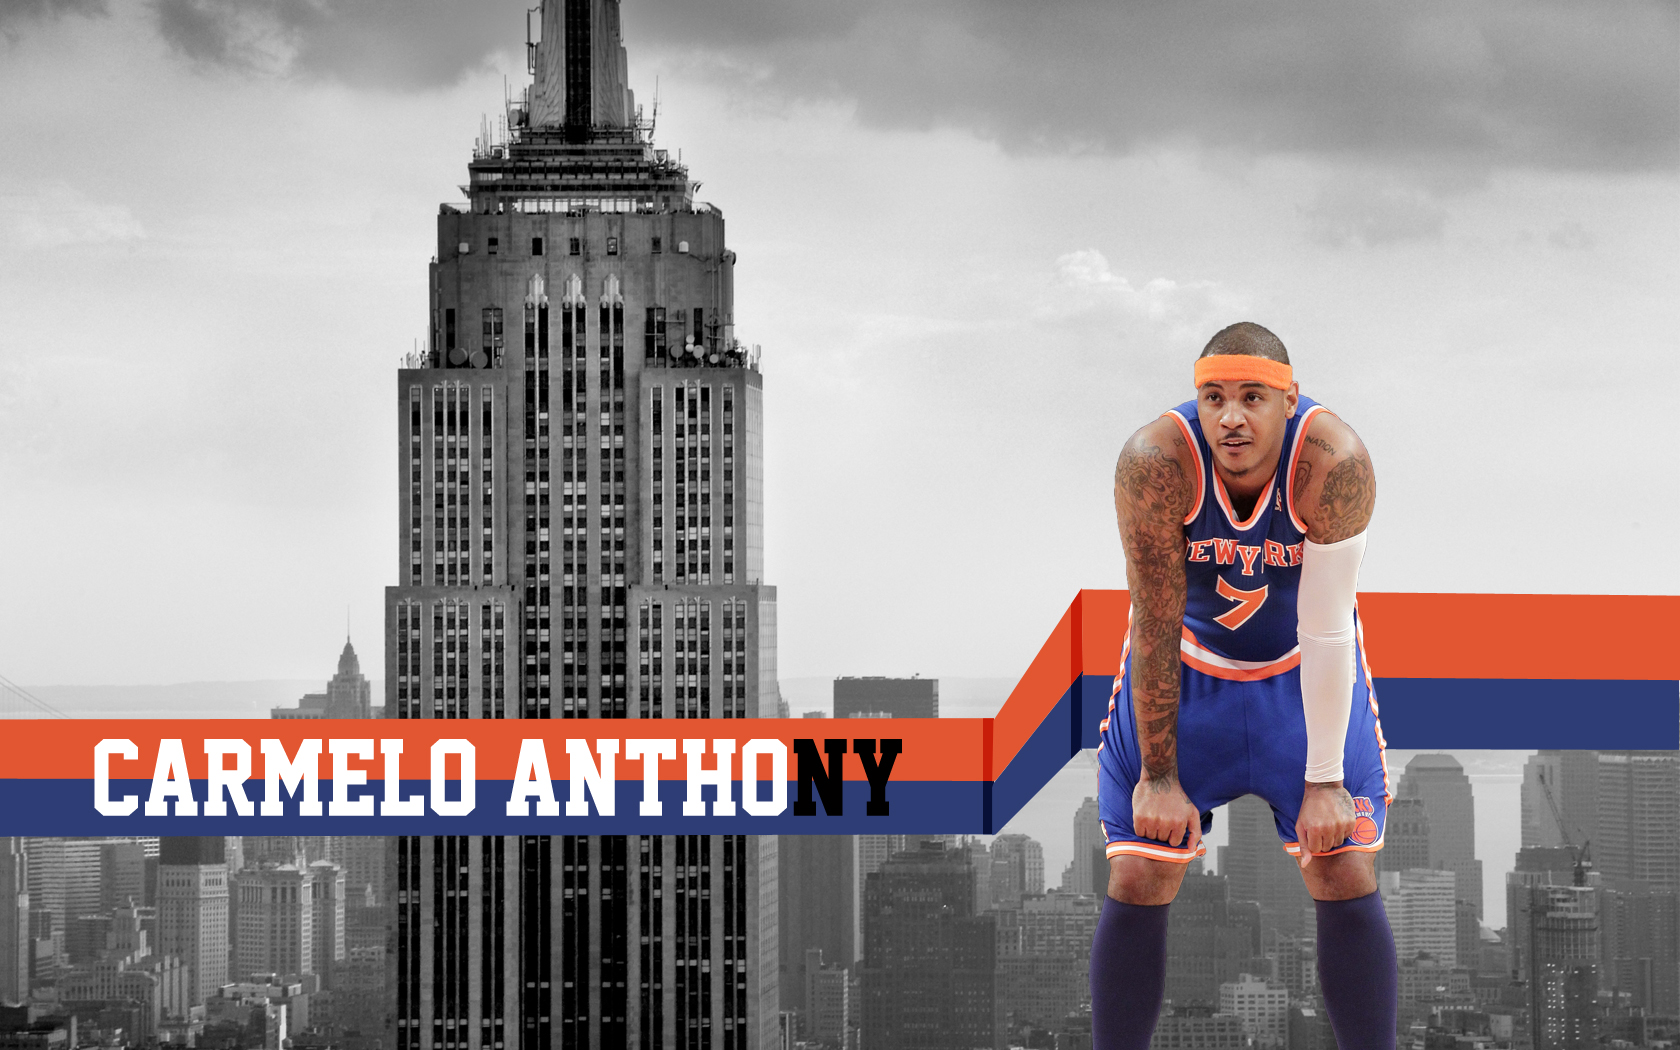 Sports New York Knicks HD Wallpaper | Background Image